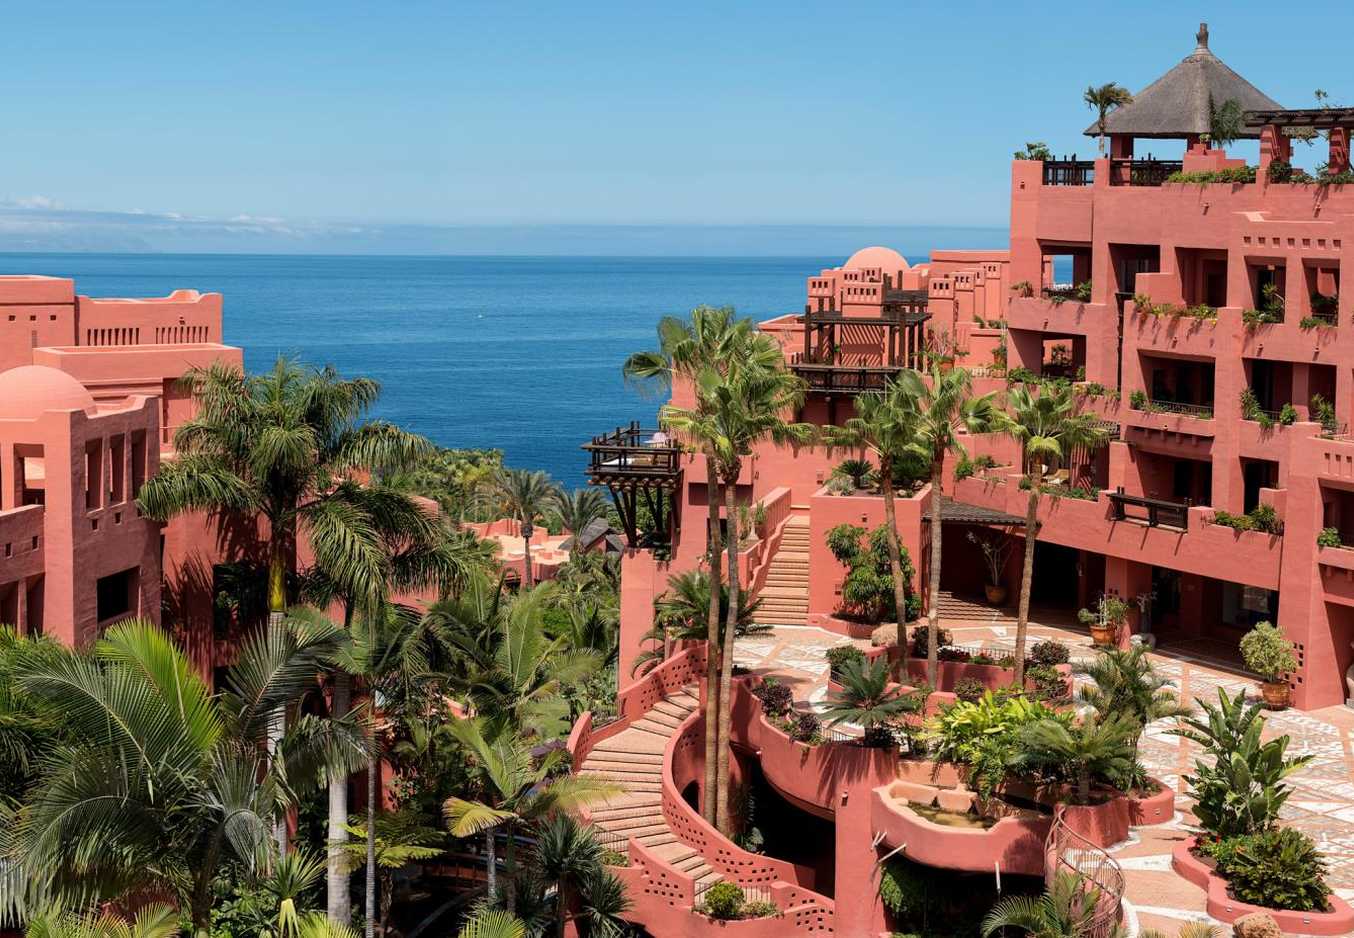 Ritz-Carlton Resort Tenerife (50%)